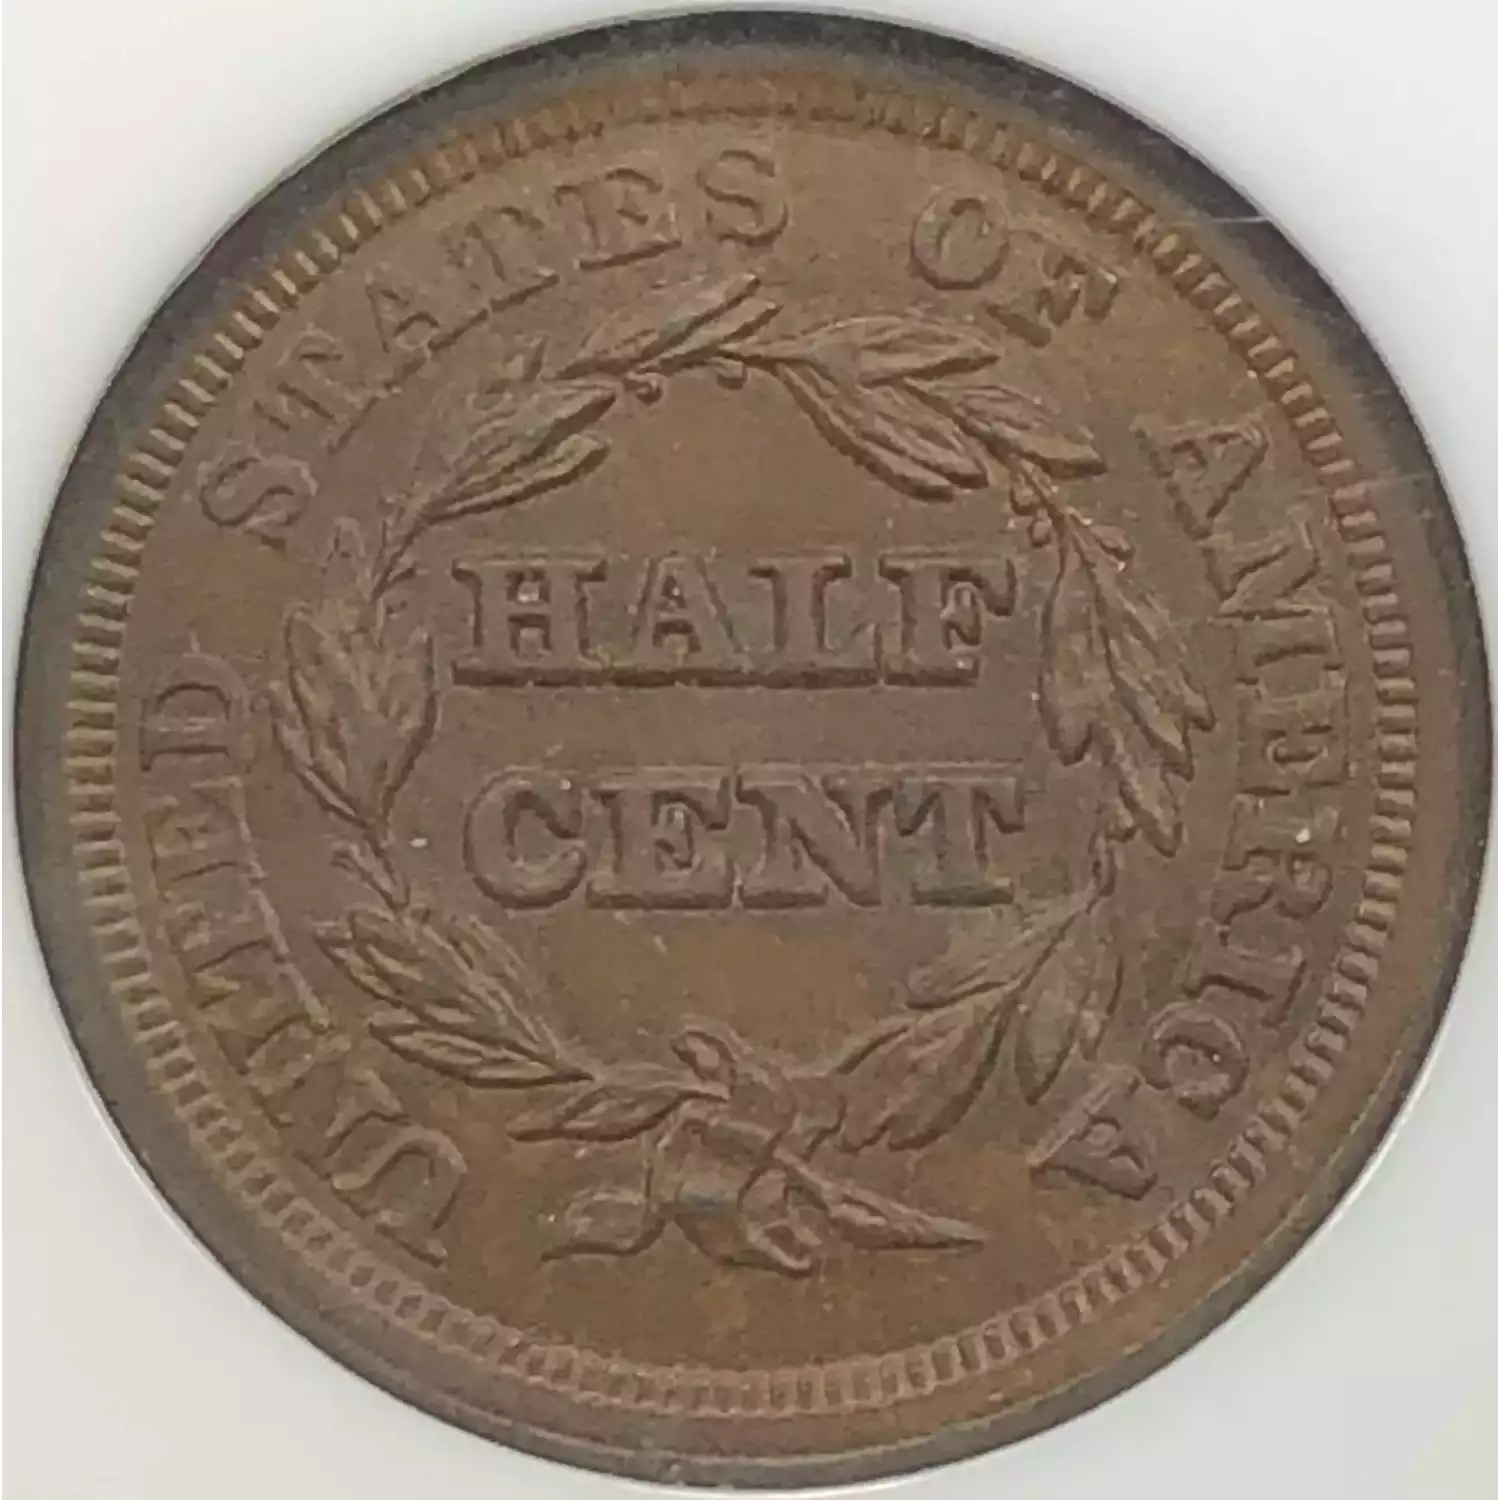 https://djrarecoins.com/thumbs/half-cents-braided-hair-1840-57-copper-12152-large.jpeg